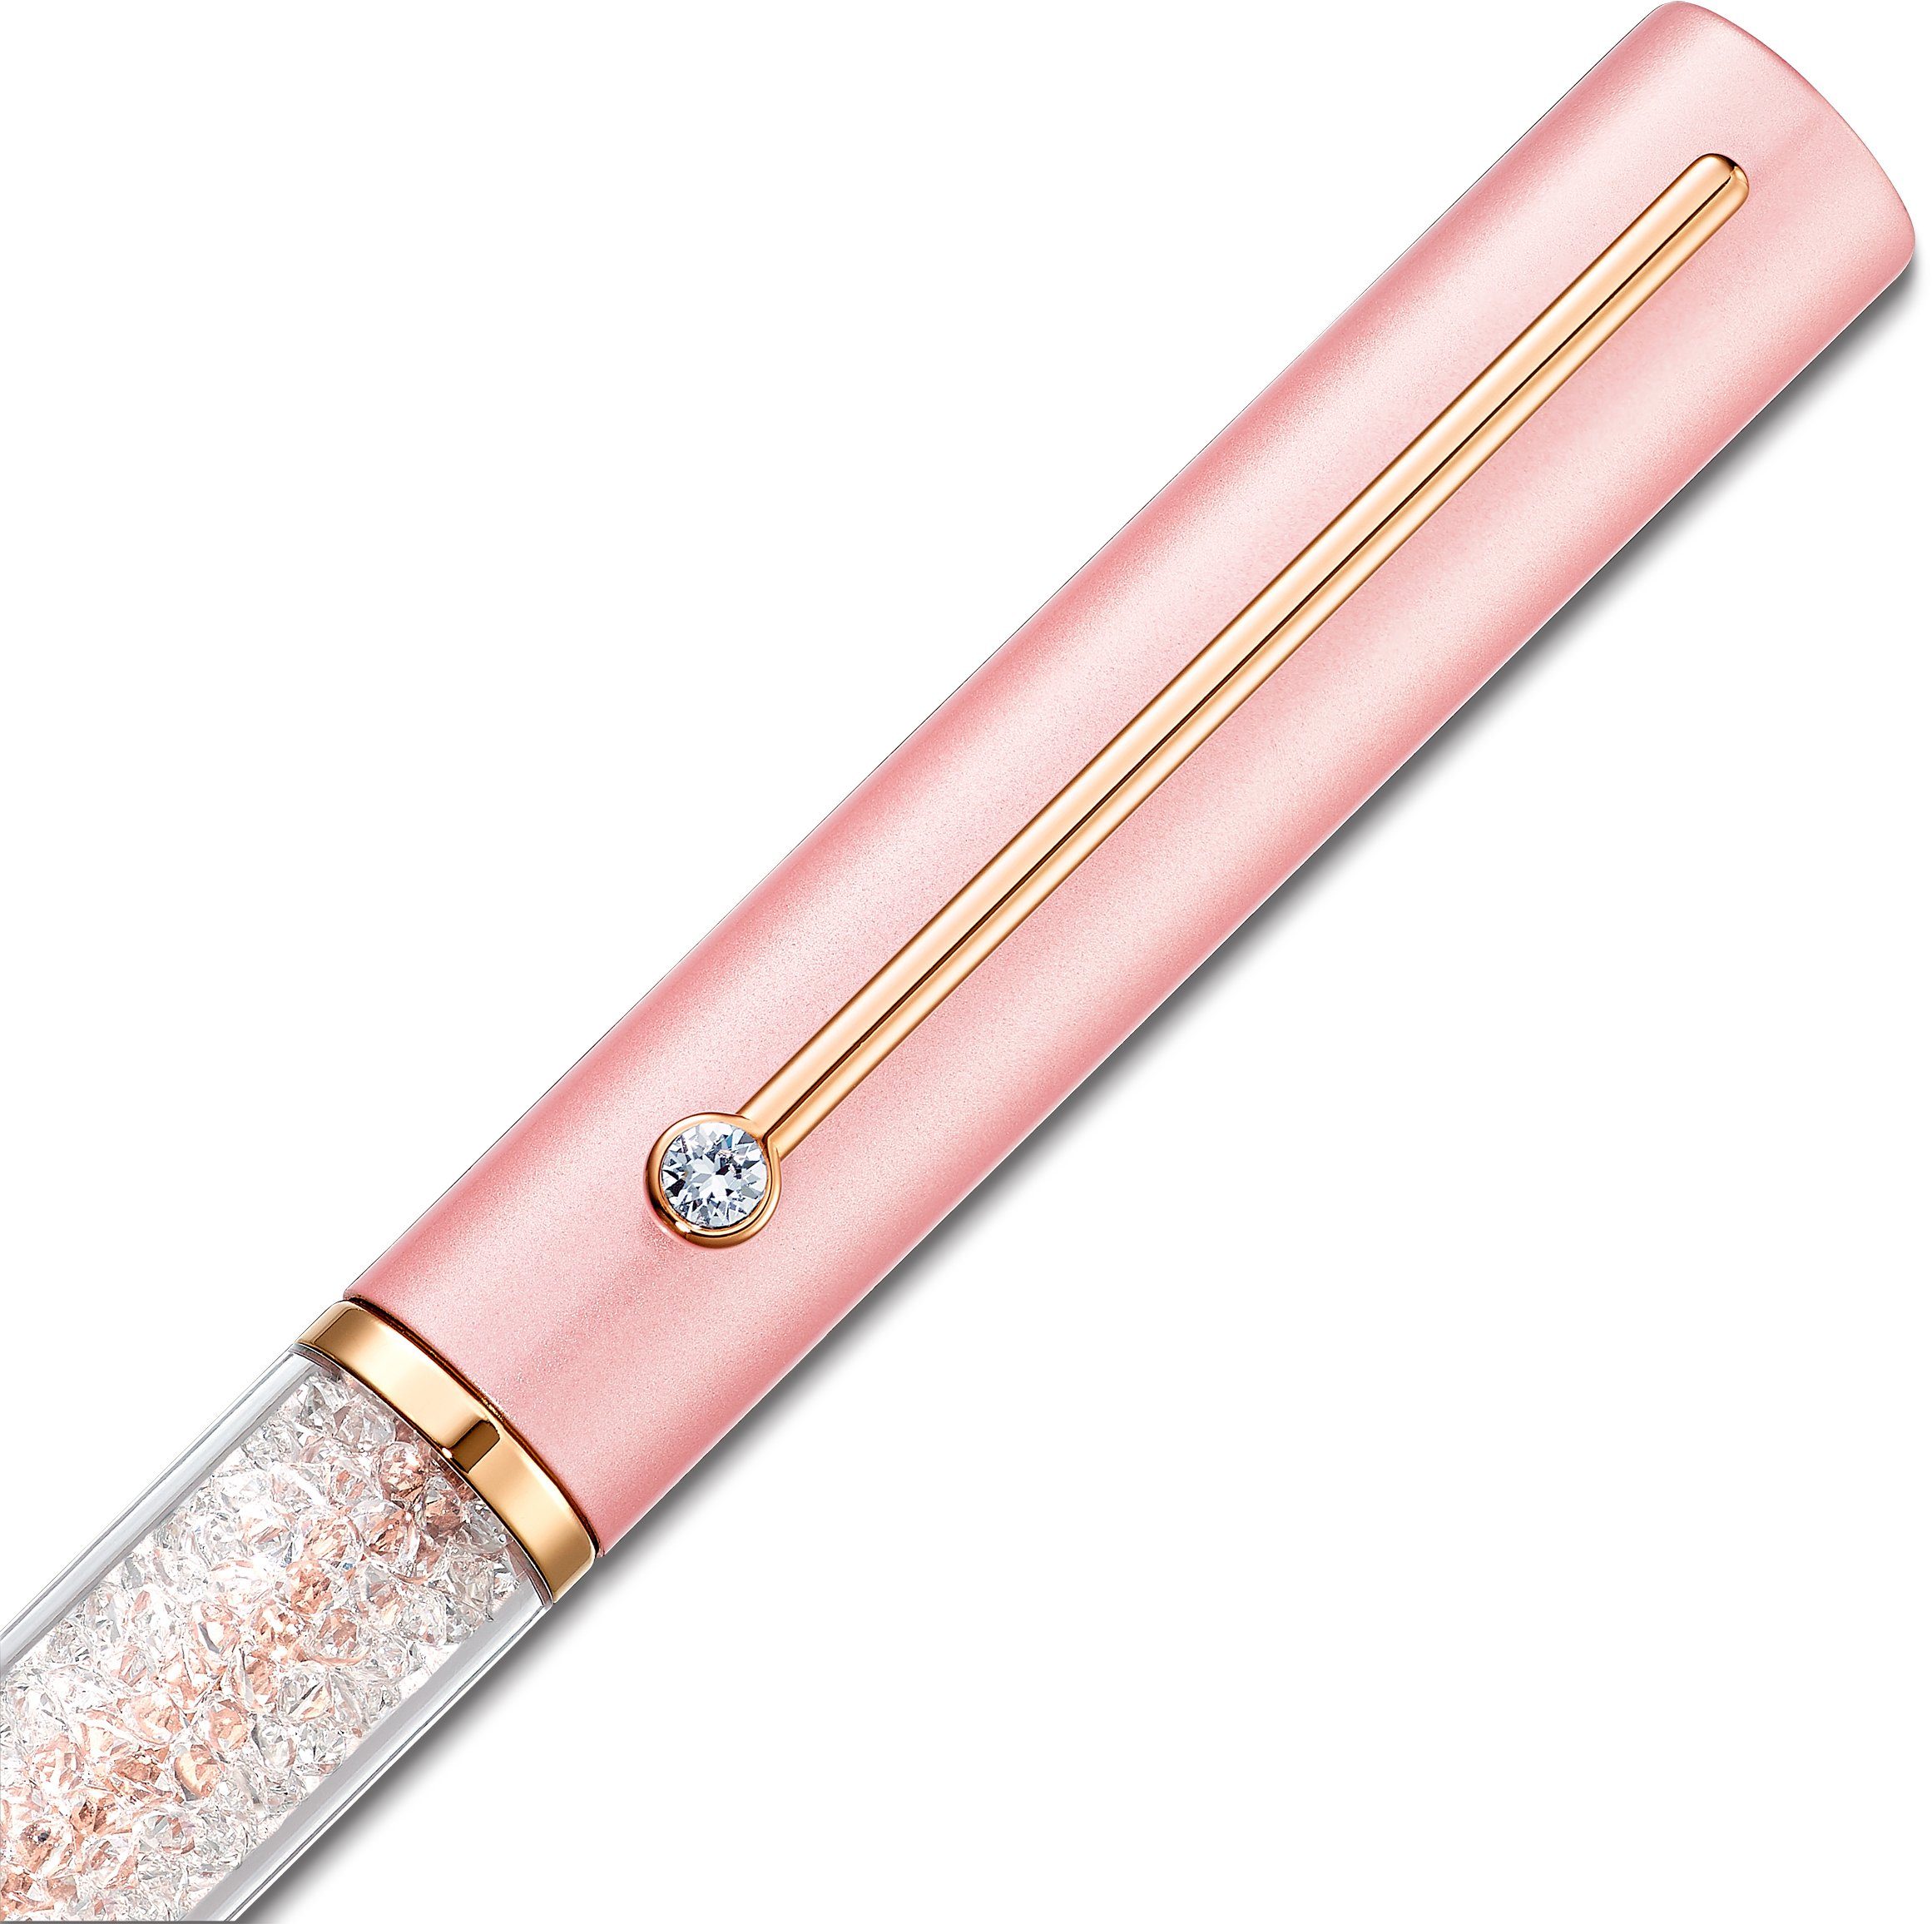 Gloss, 5568756 Rosé Kugelschreiber rosa, Crystalline vergoldet, Swarovski